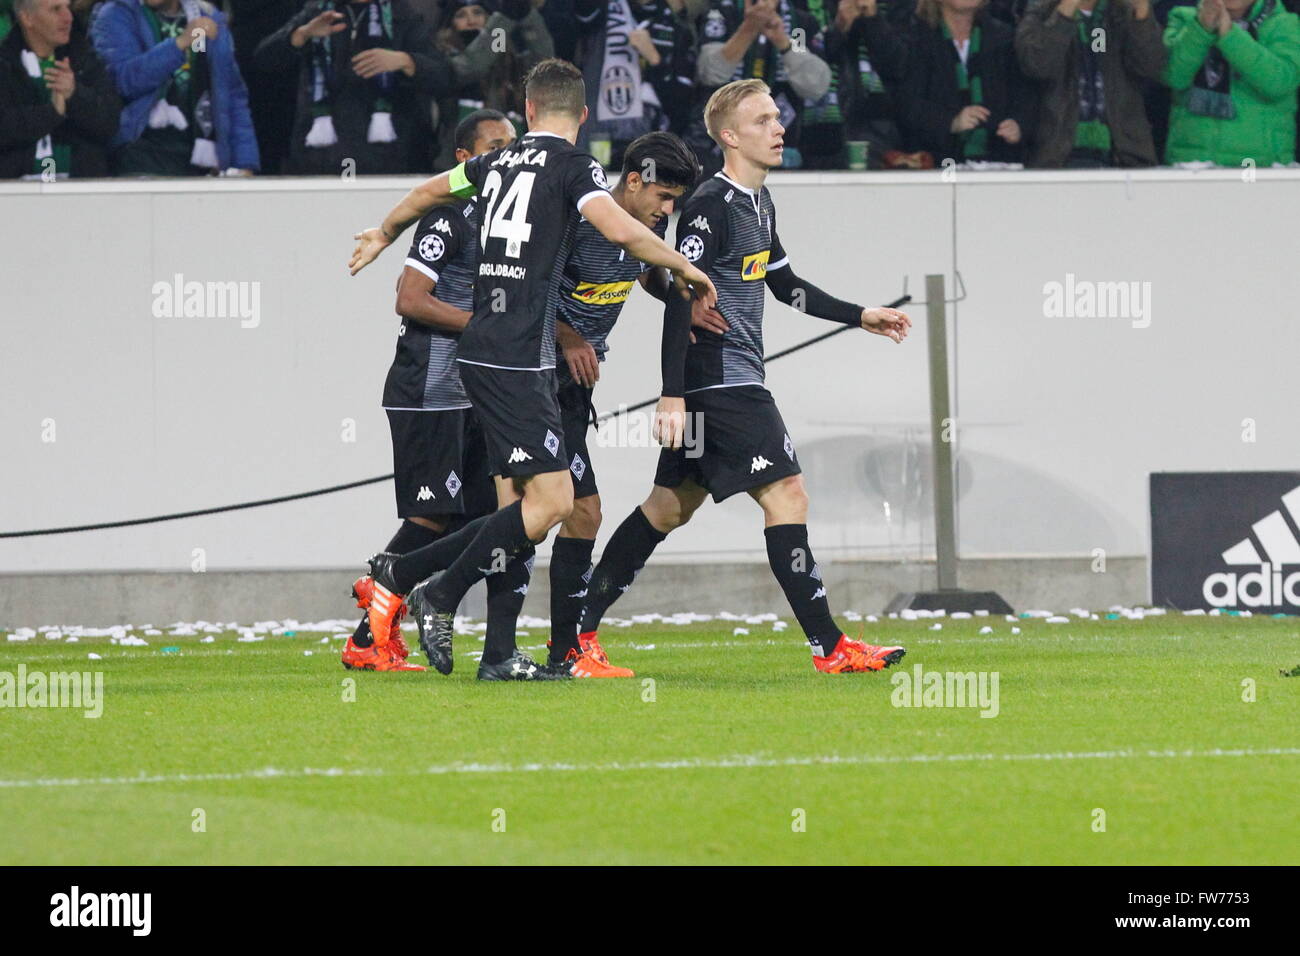 Goal Fabian Johnson in action during the champion league match Monchengladbach - Juventus Monchengladbach, November 3, 2015 Stock Photo